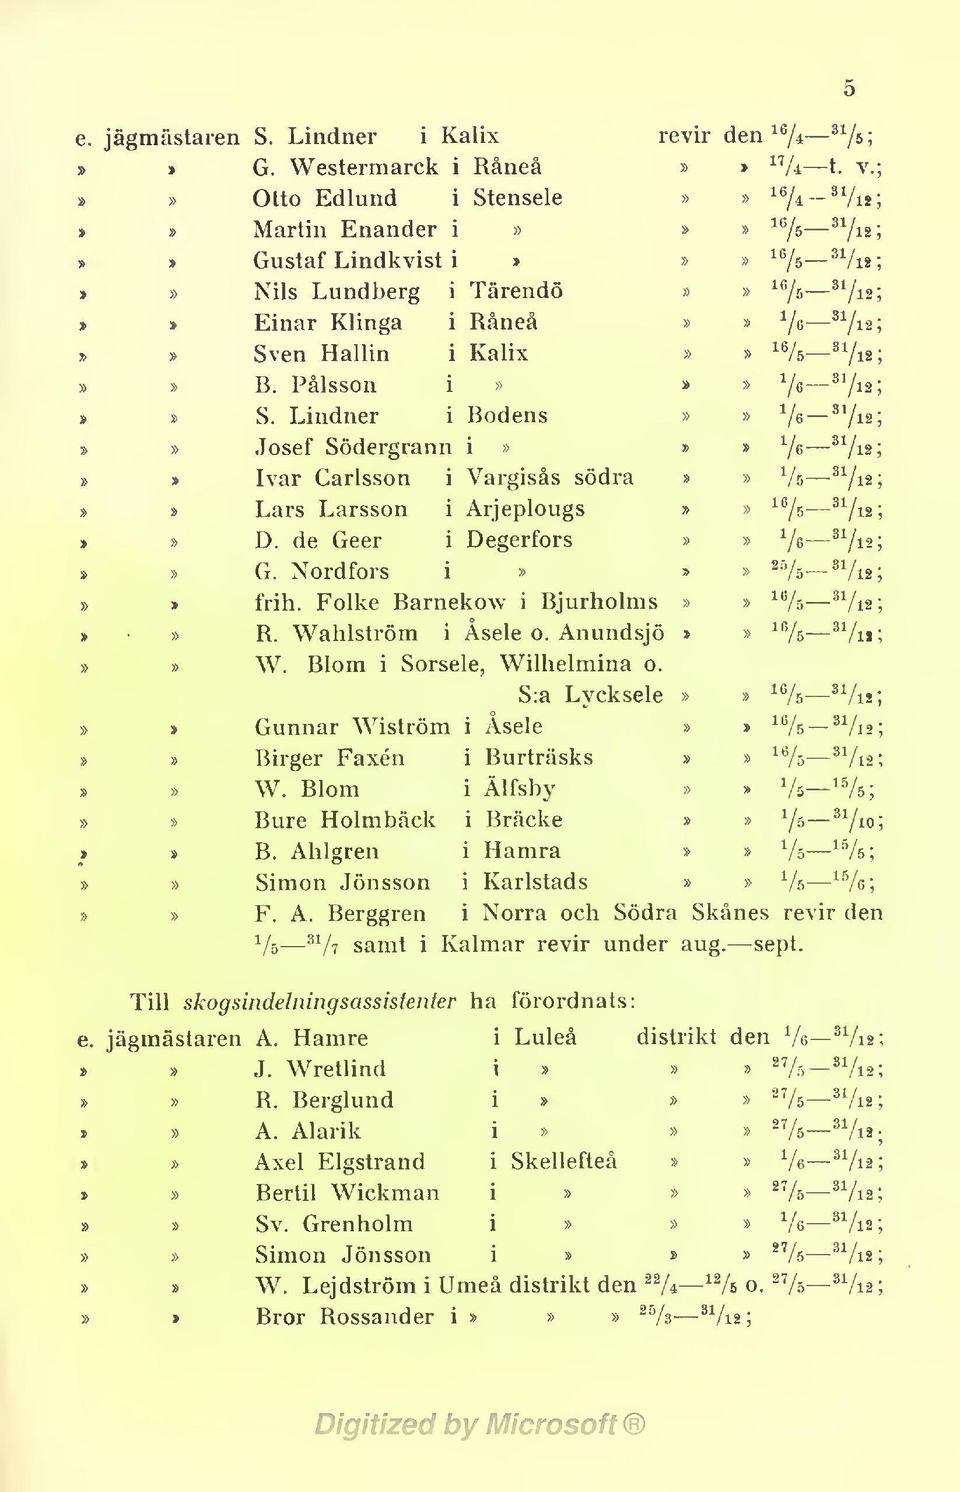 Wahlström i Asele o. Anundsjö W. Blom i Sorsele, Wilhelmina o. ni n/..3^ ^75.31/ S:a Lycksele Gunnar Wiström i Asele Birger Faxén i Burträsks W. Blom i Älfsby Bure Holmbäck i Bräcke 75- B.